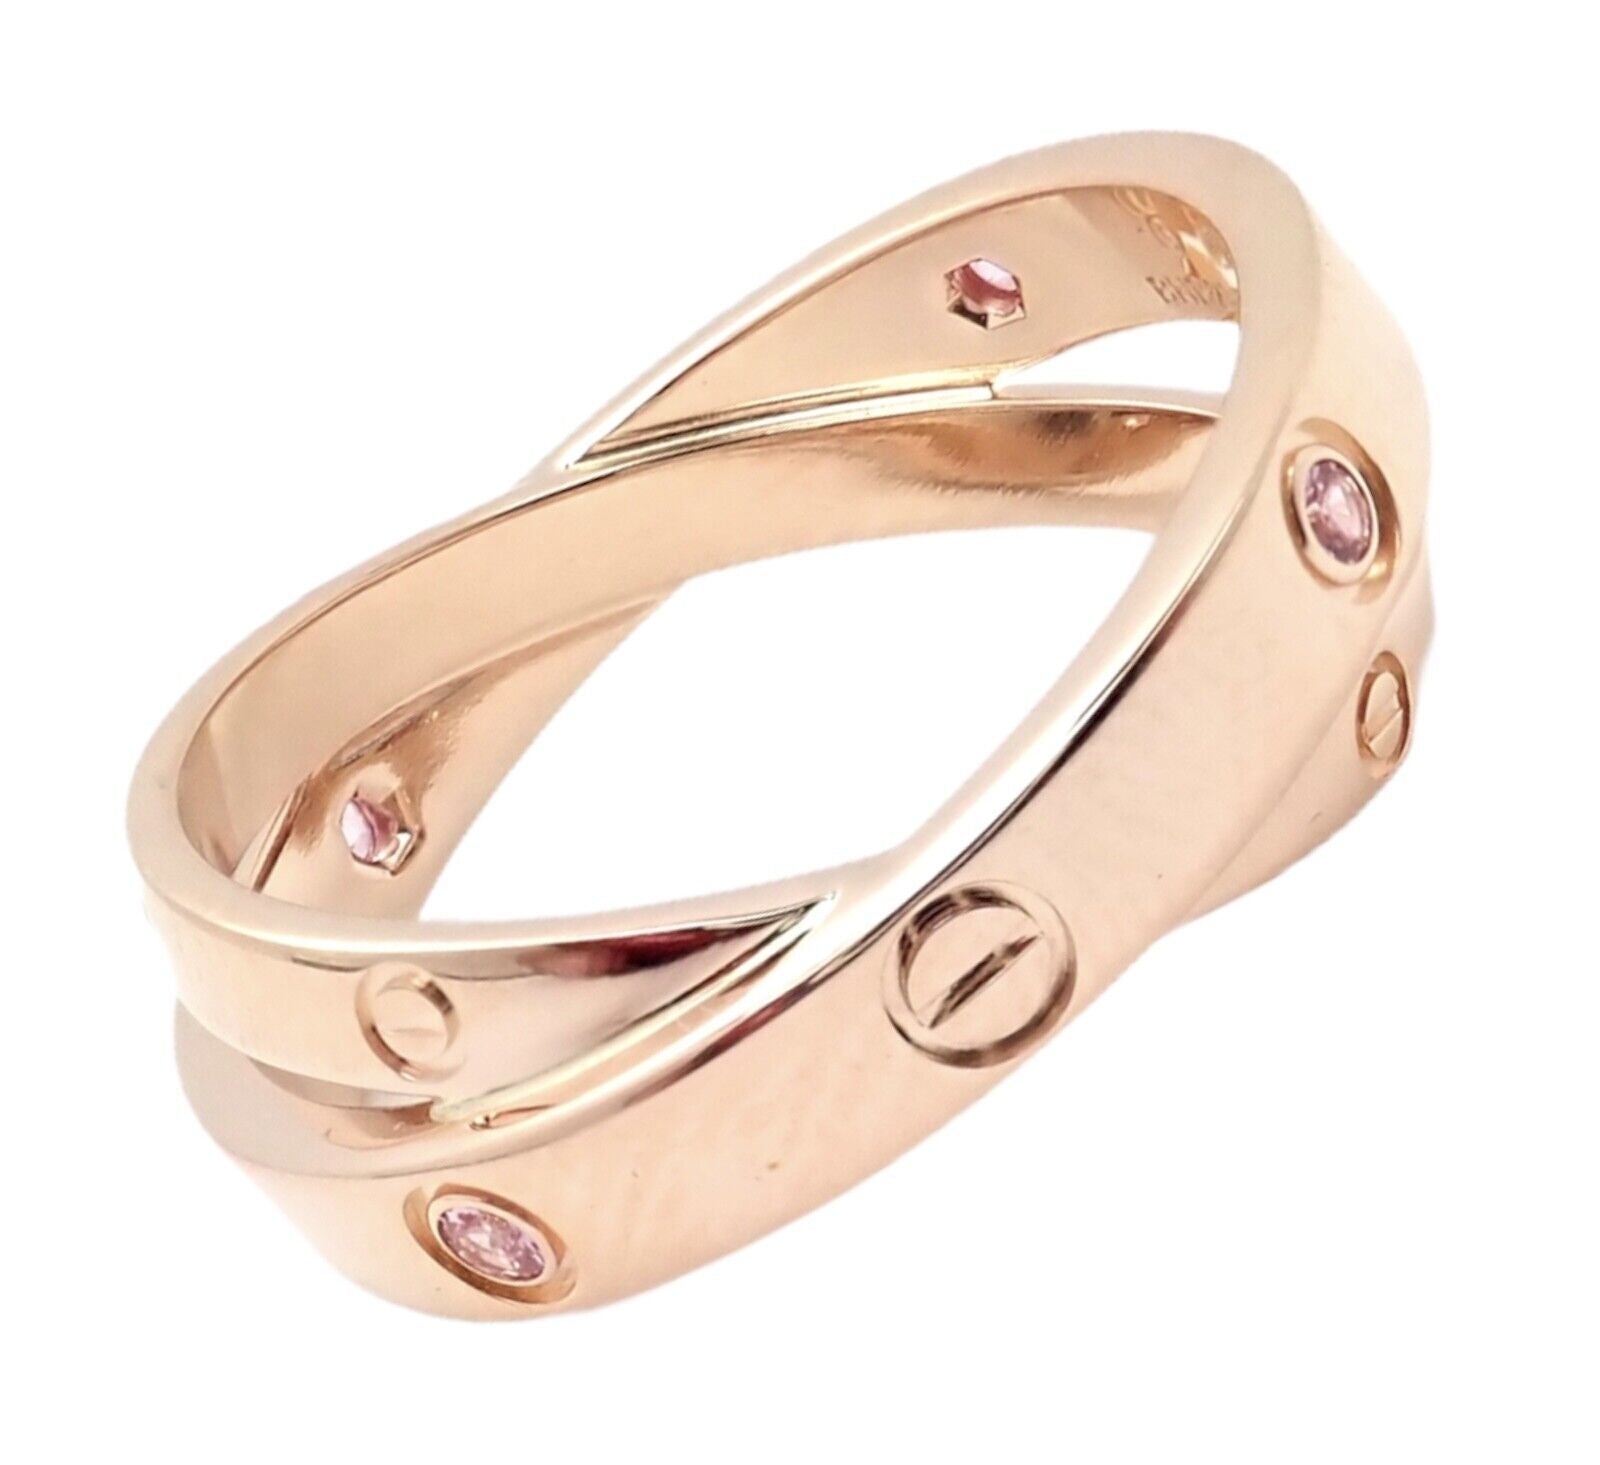 Authentic! Cartier Love 18k Rose Gold Pink Sapphire Diamond Ring sz 8.25